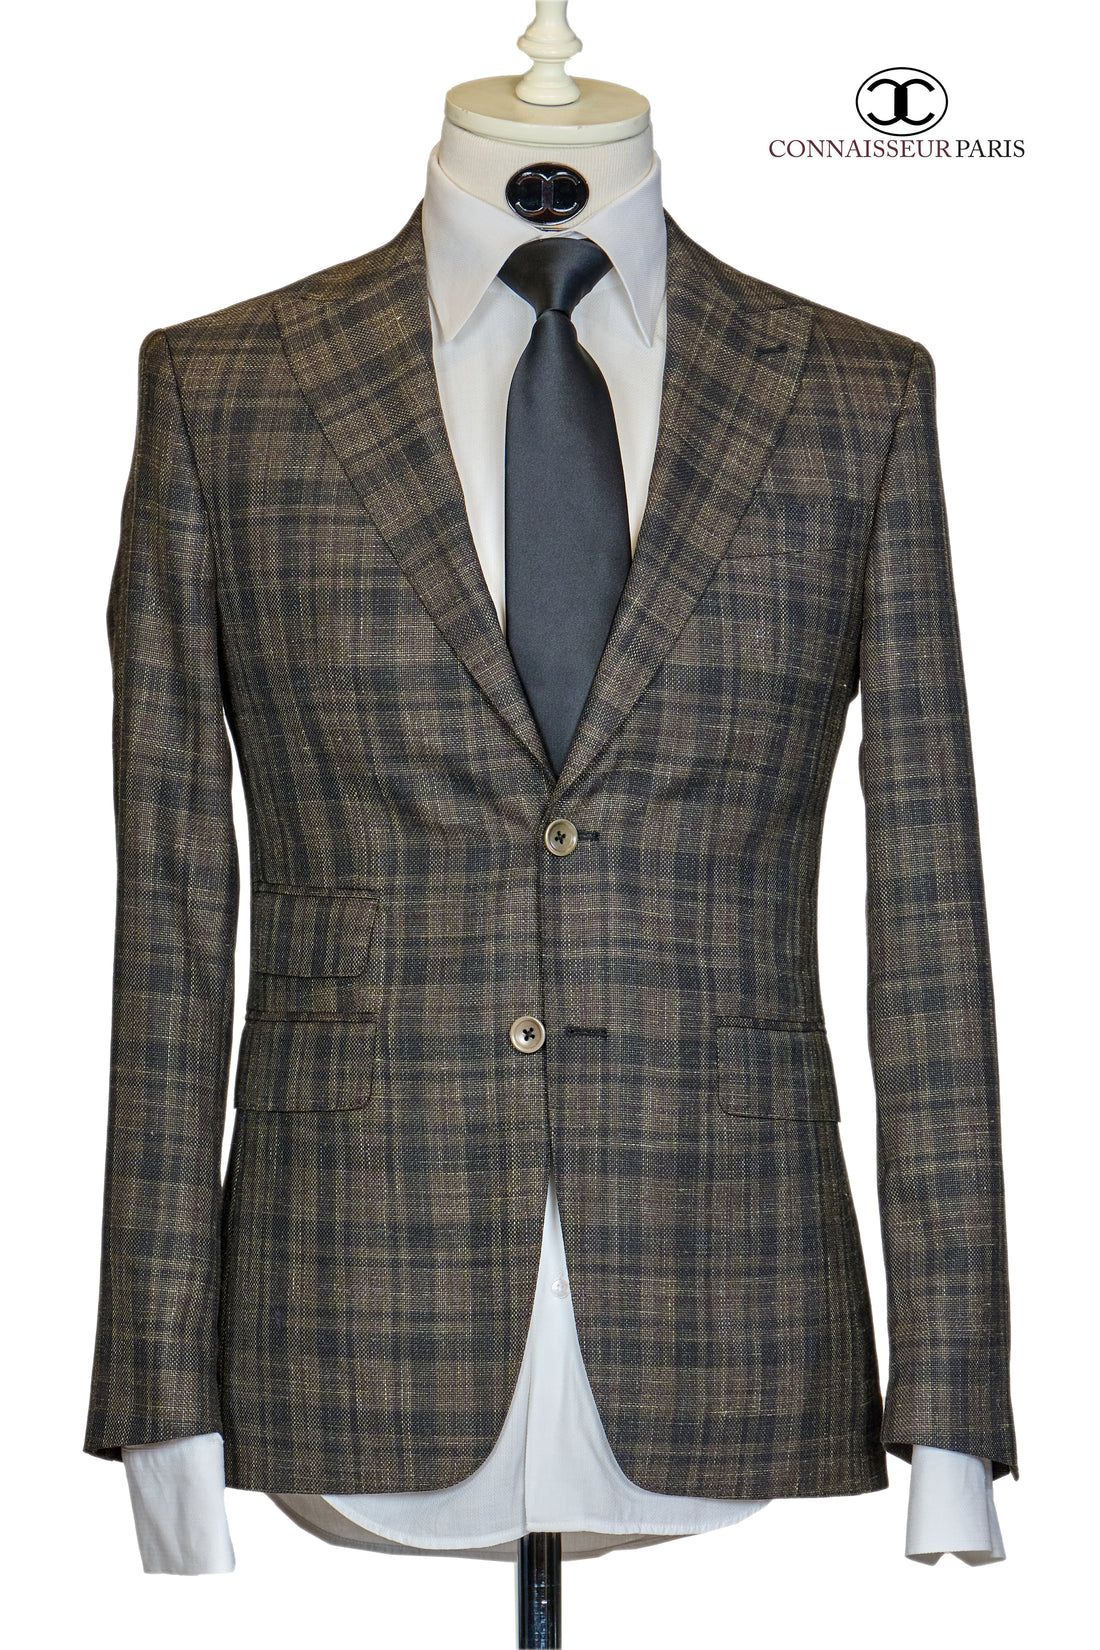 Vitale Barberis - Brown with grey and black plaid slim fit suit